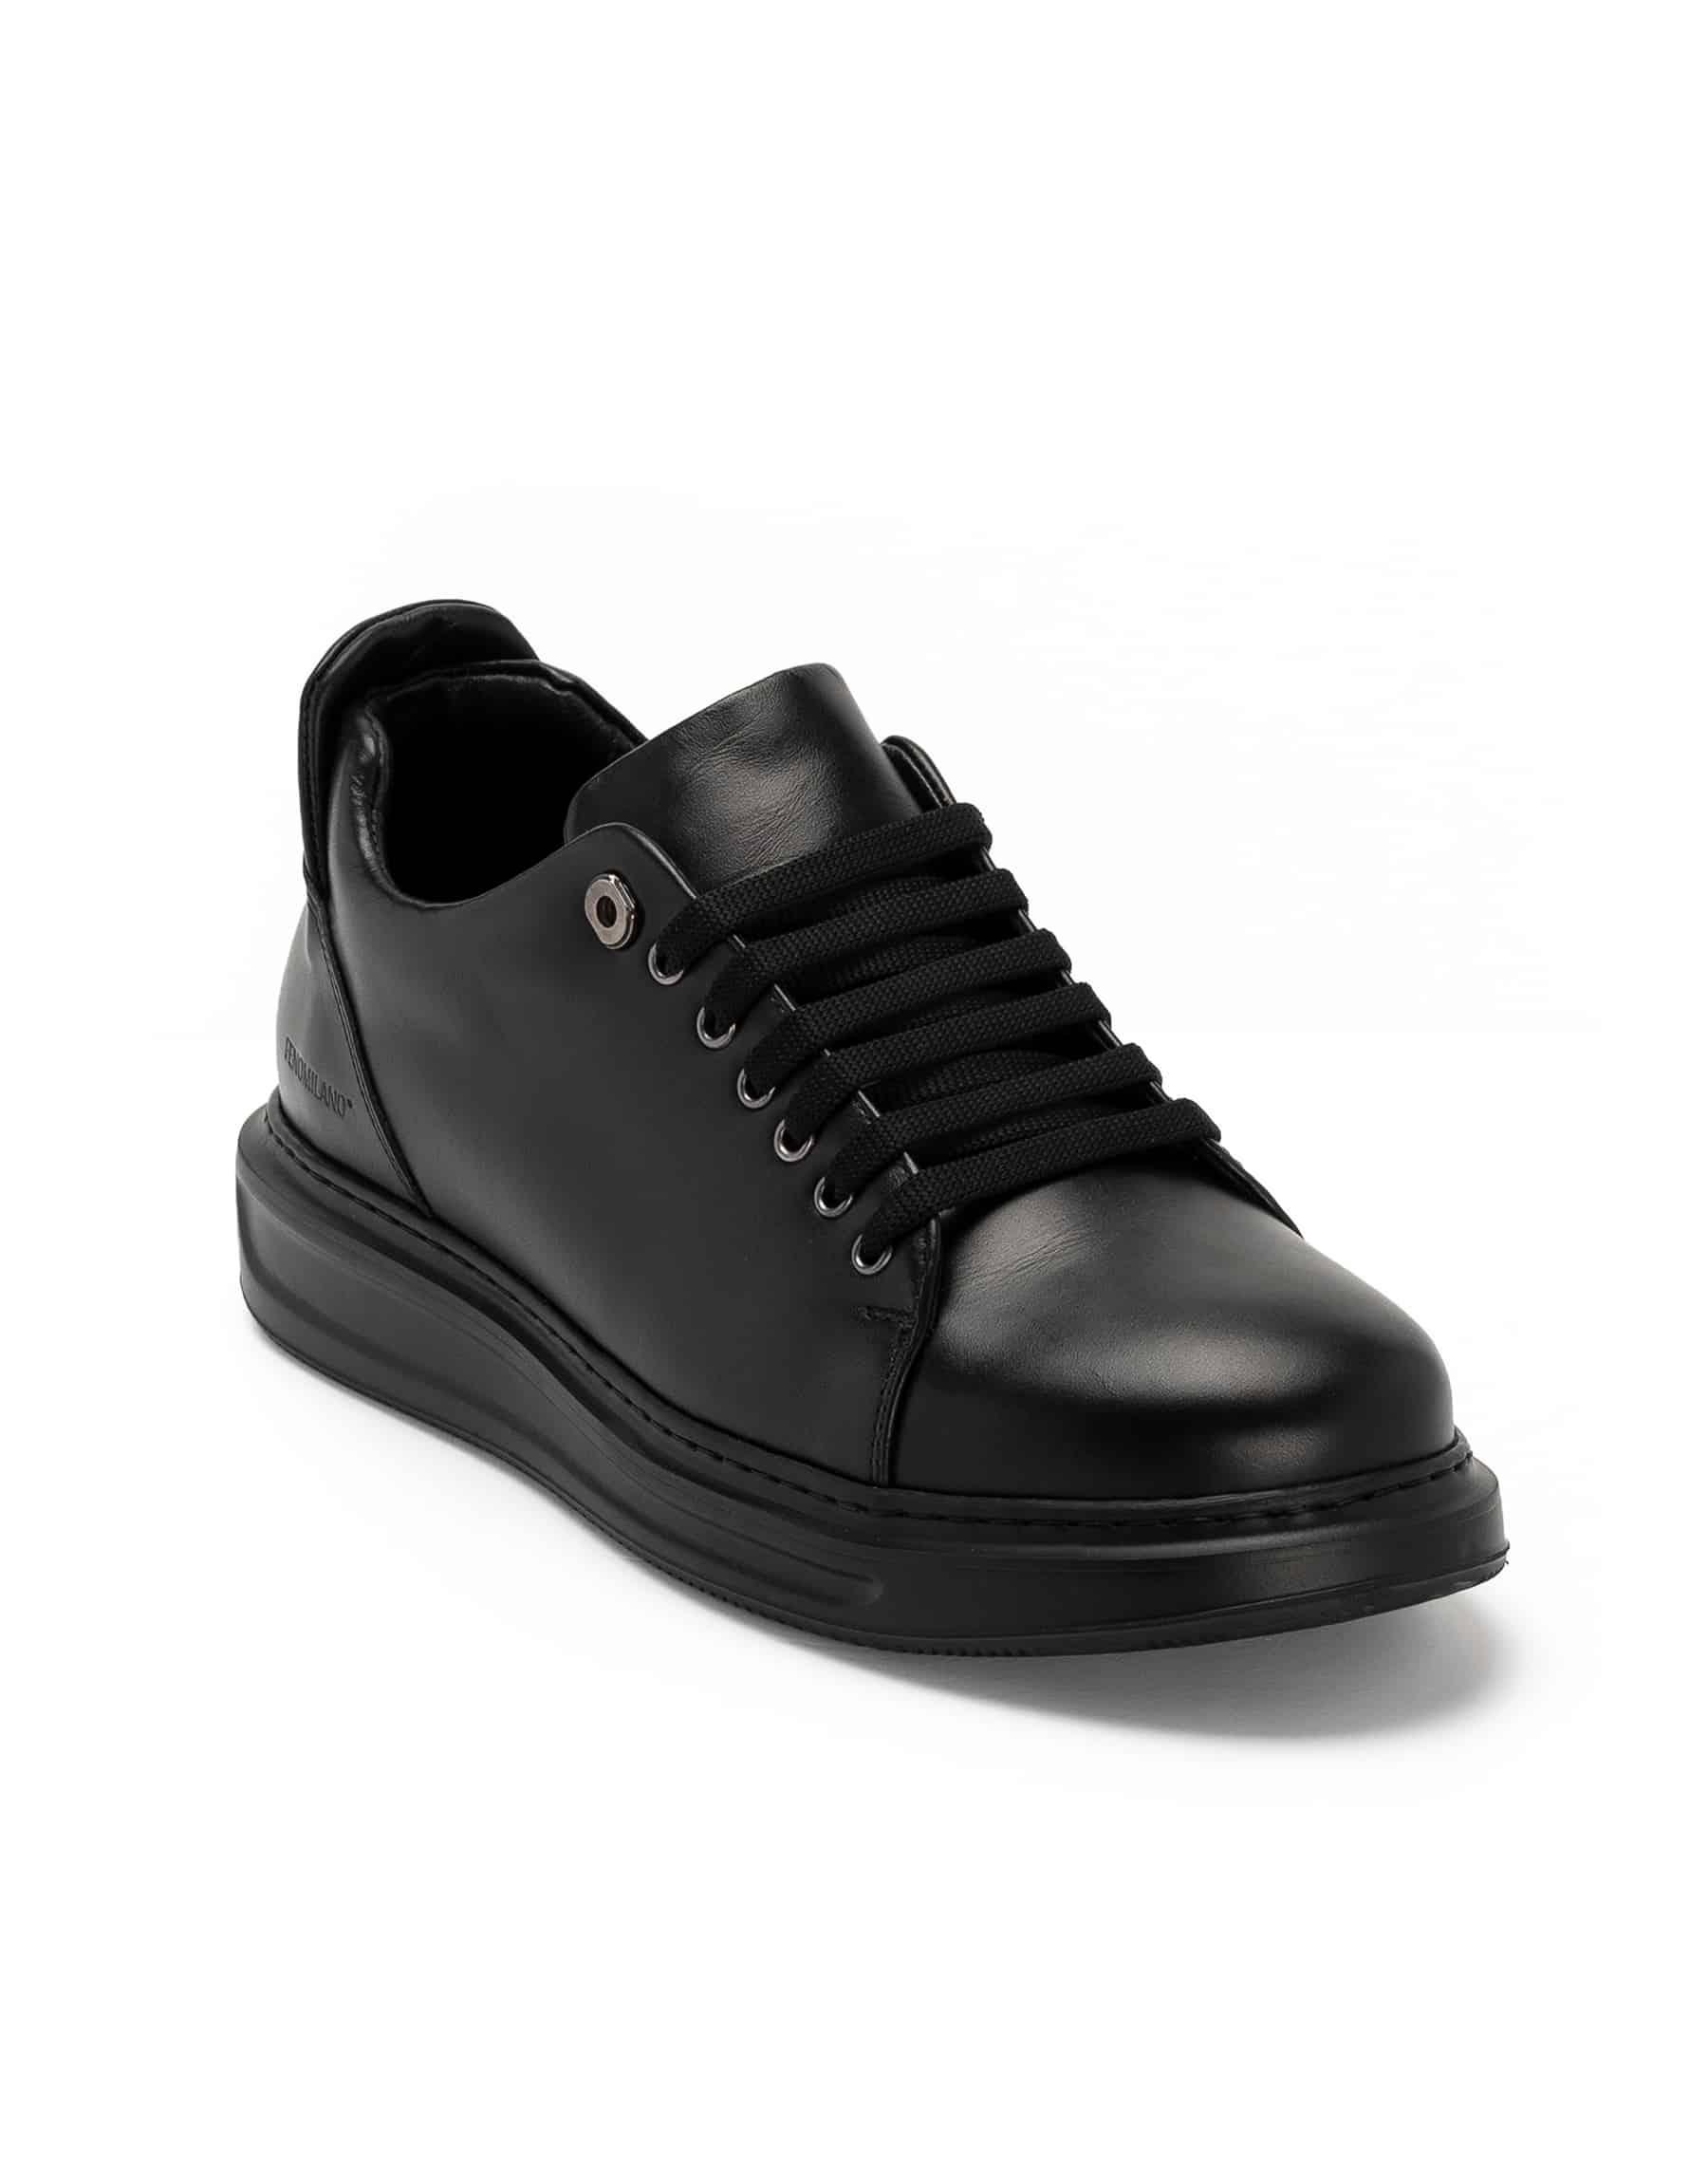 ANDREW SCOTT Men's Black Leather Sneakers For Men - Buy Black Color ANDREW  SCOTT Men's Black Leather Sneakers For Men Online at Best Price - Shop  Online for Footwears in India | Flipkart.com